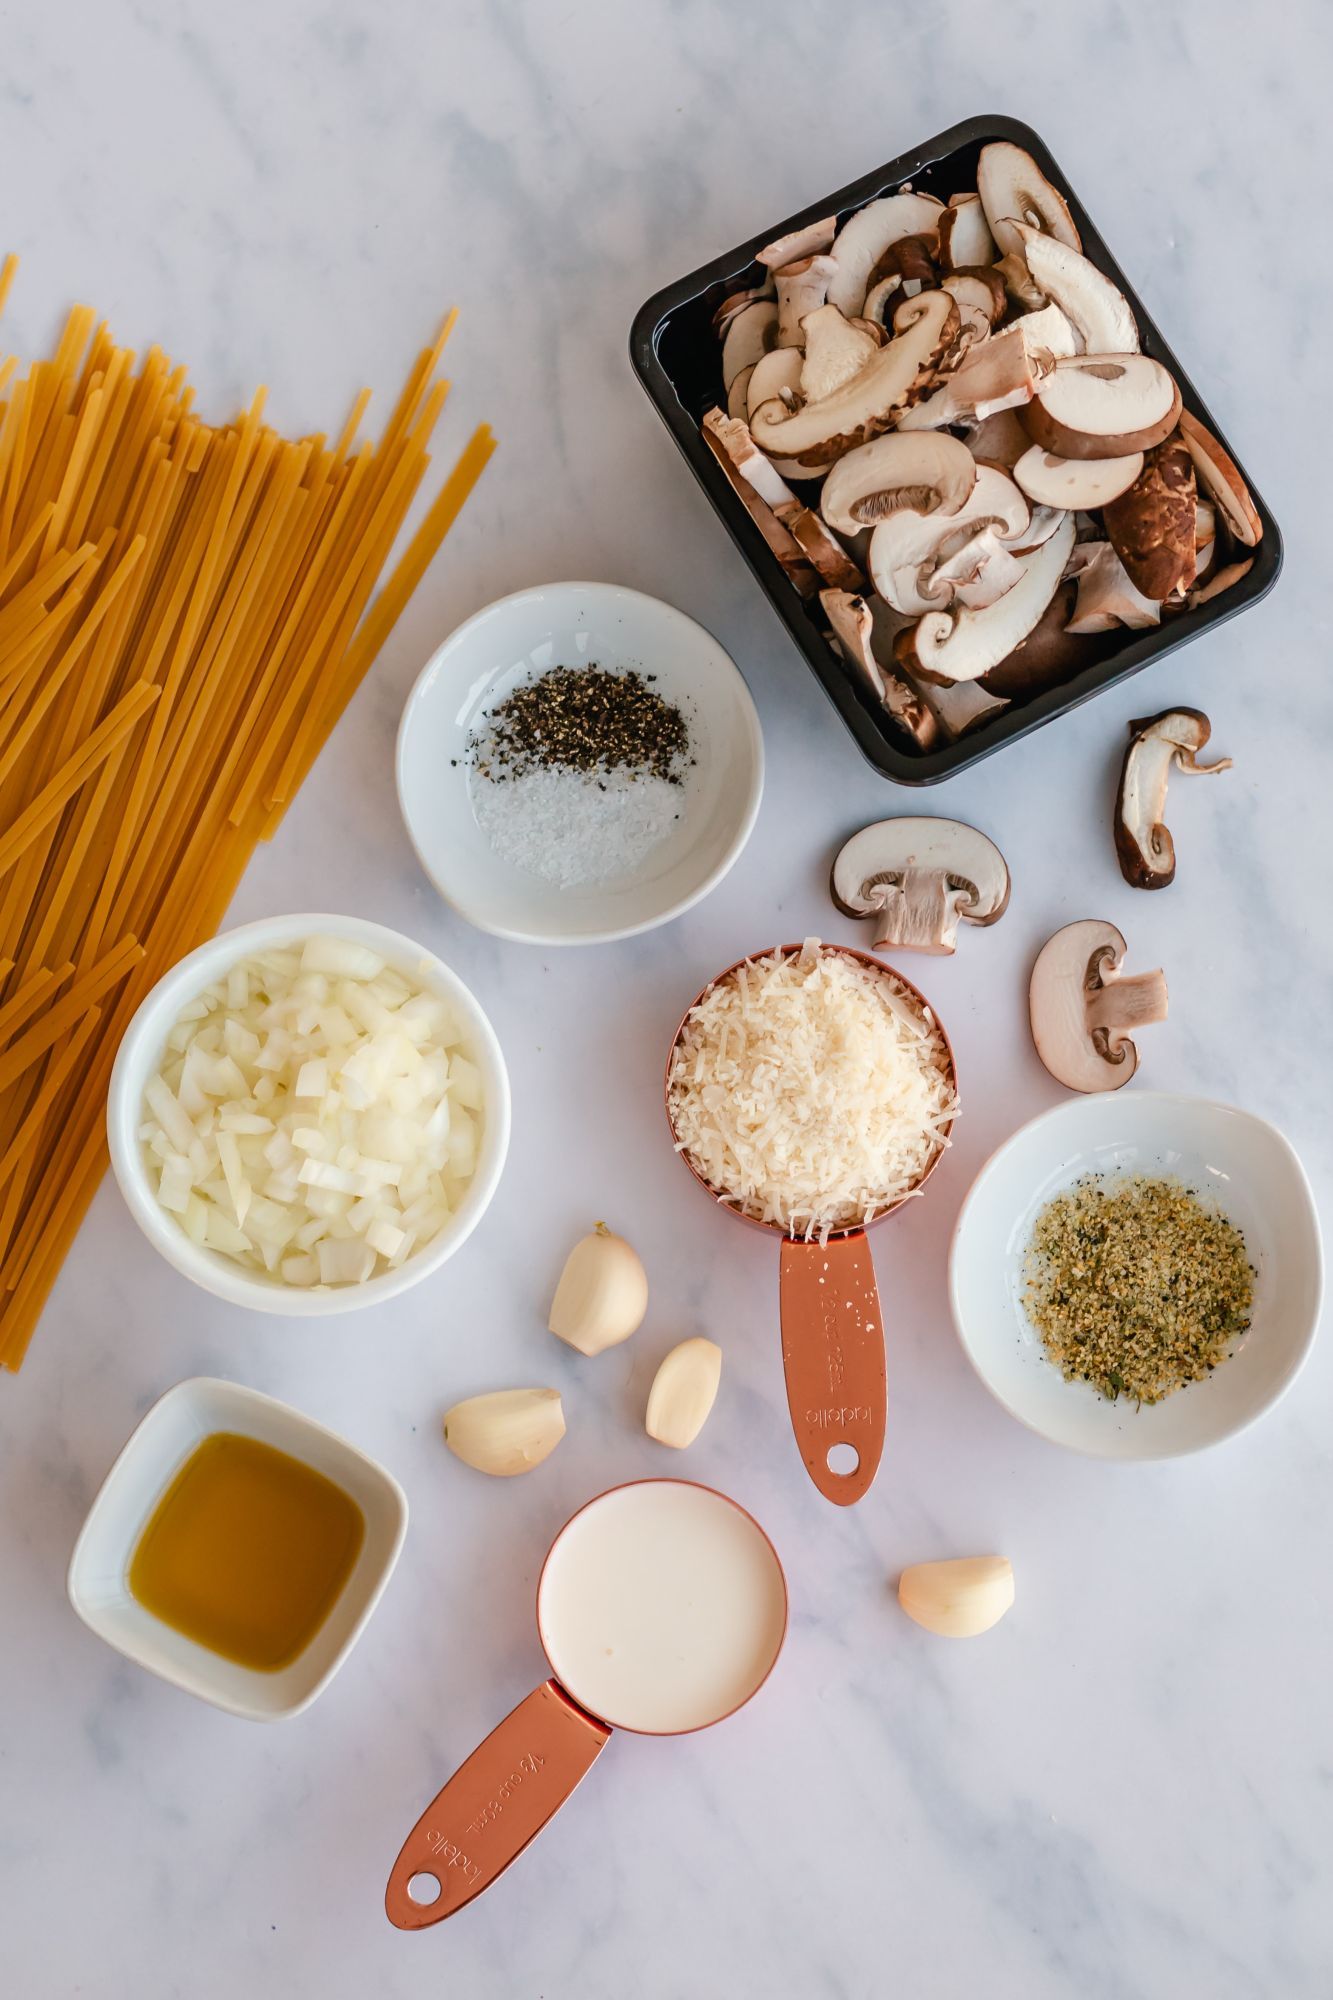 Ingredients to make creamy mushroom pasta including sliced mushroom, garlic, onion, cream, spaghetti, and Parmesan cheese.